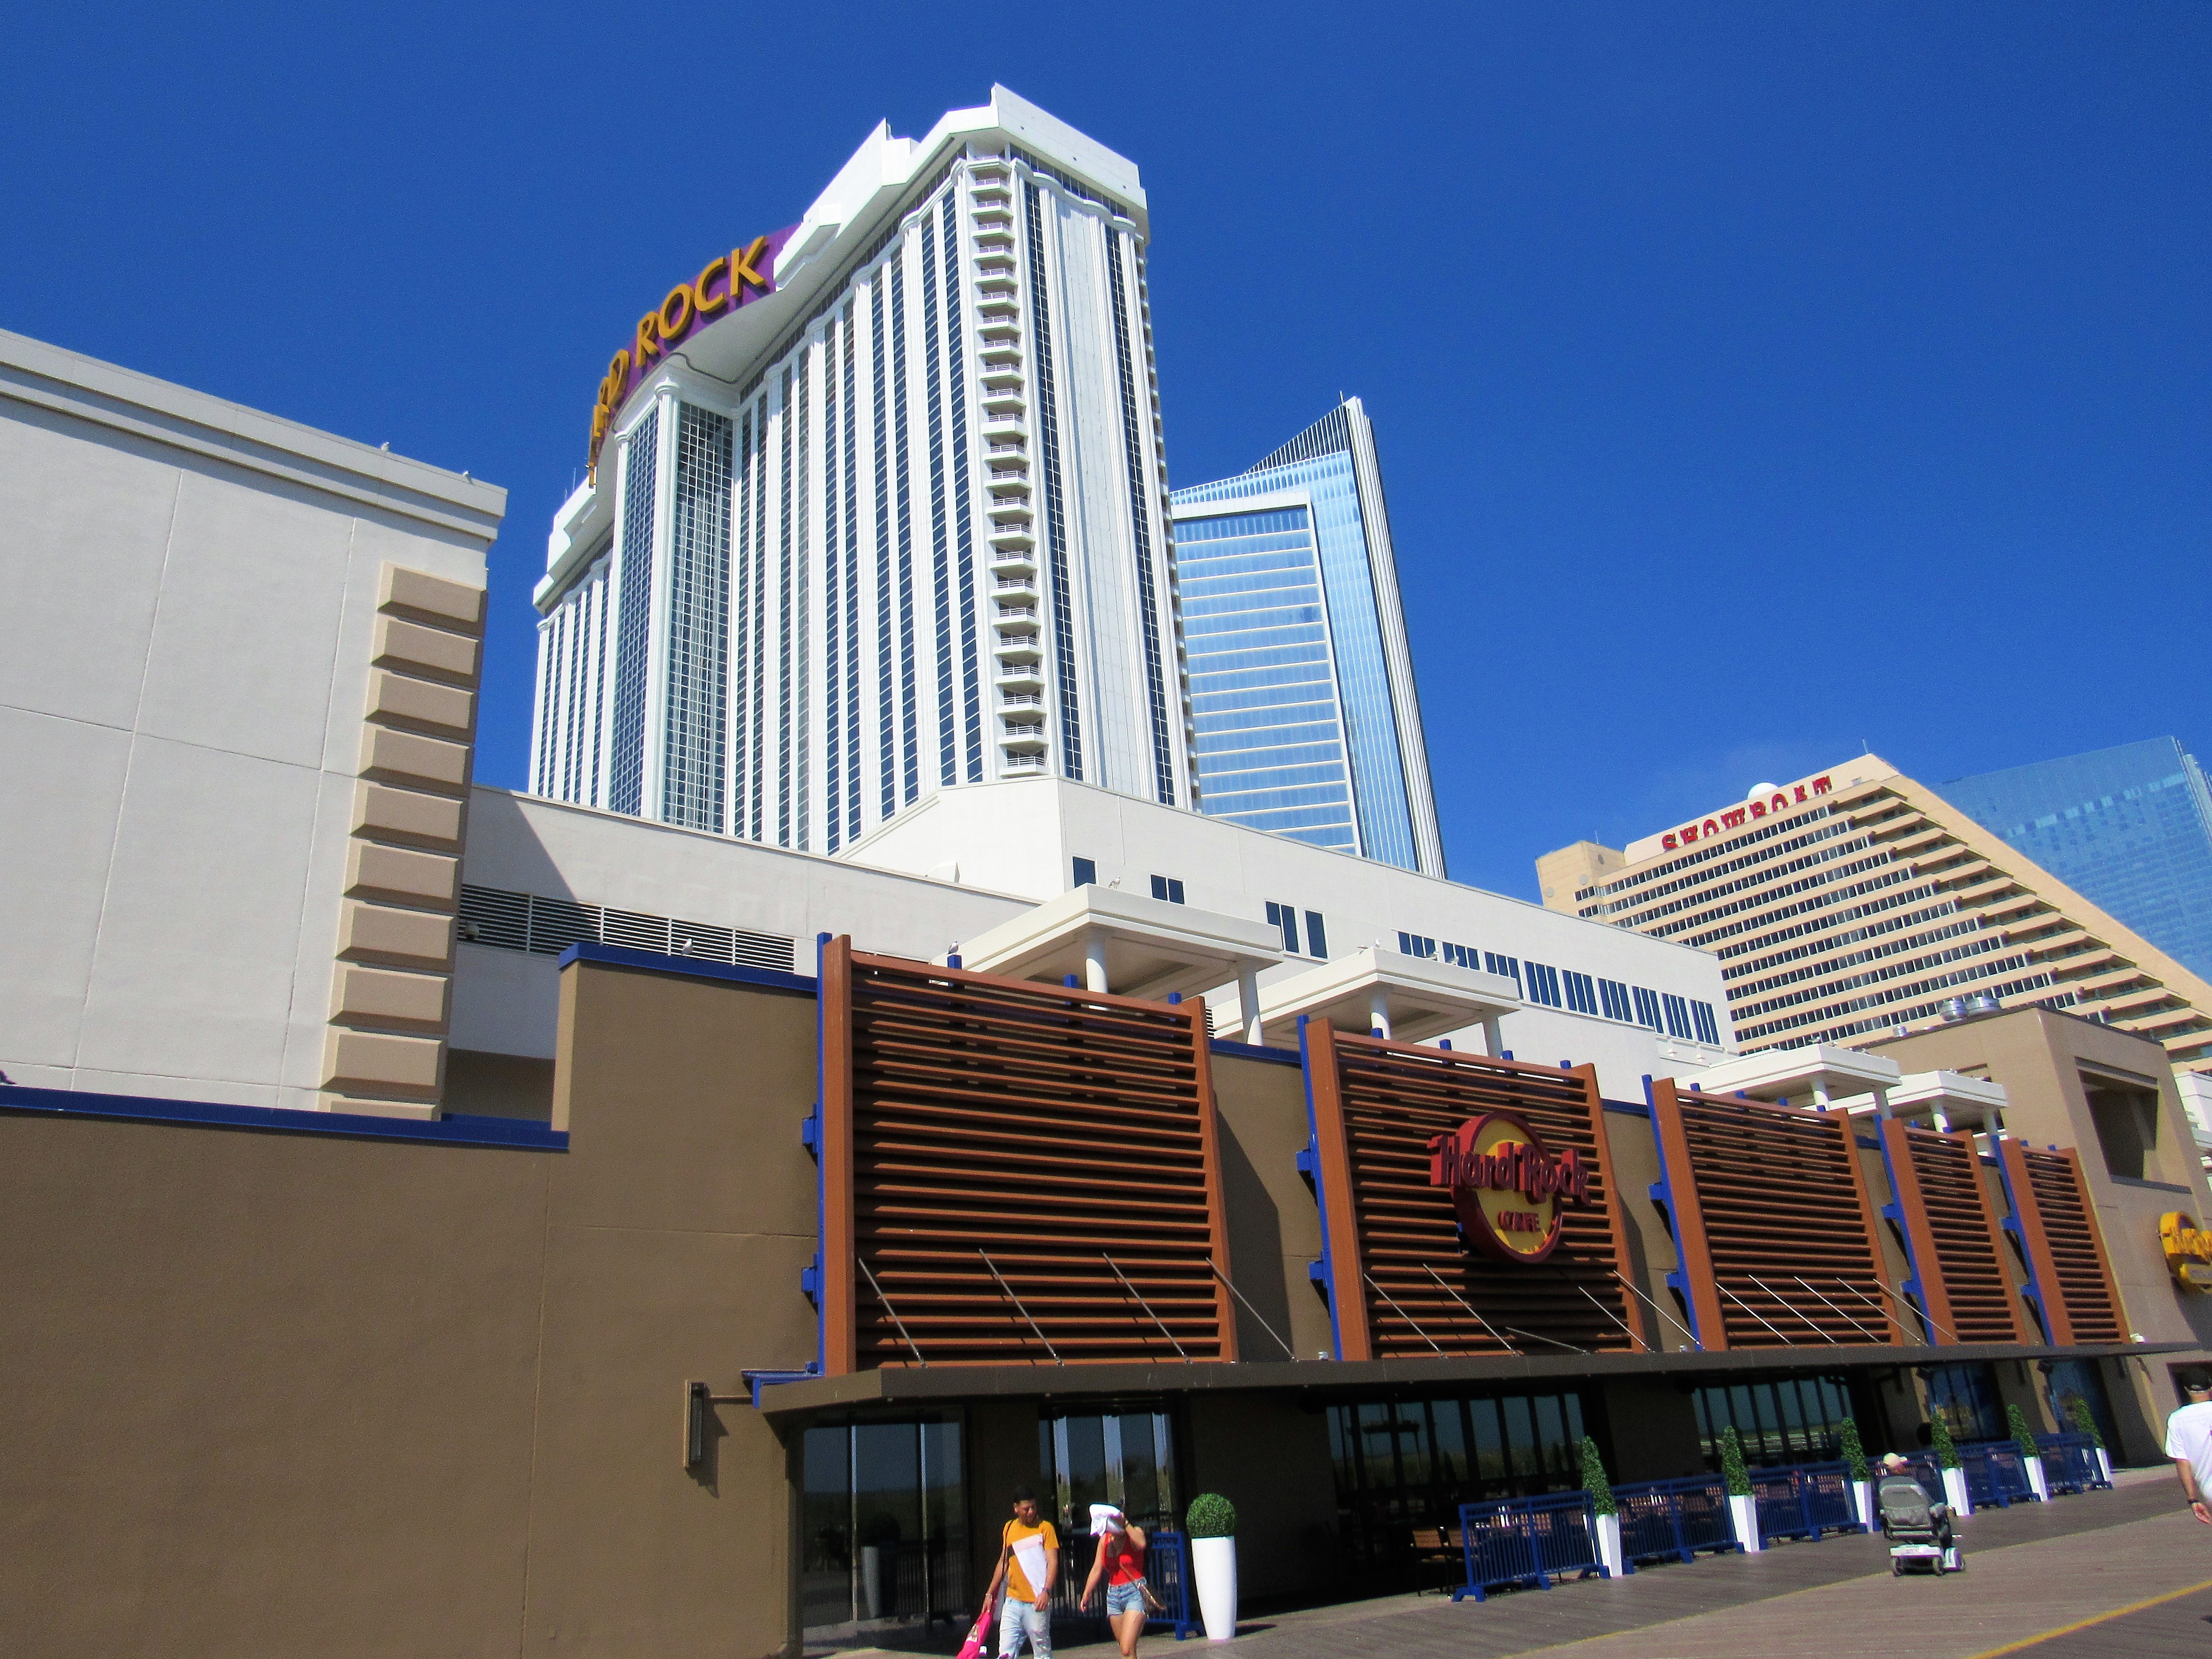 Hard Rock Hotel & Casino - Atlantic City 03.jpg English: Hard Rock Hotel & Casino in Atlantic City, New Jersey. Date 5 September 2018, 15:29:19